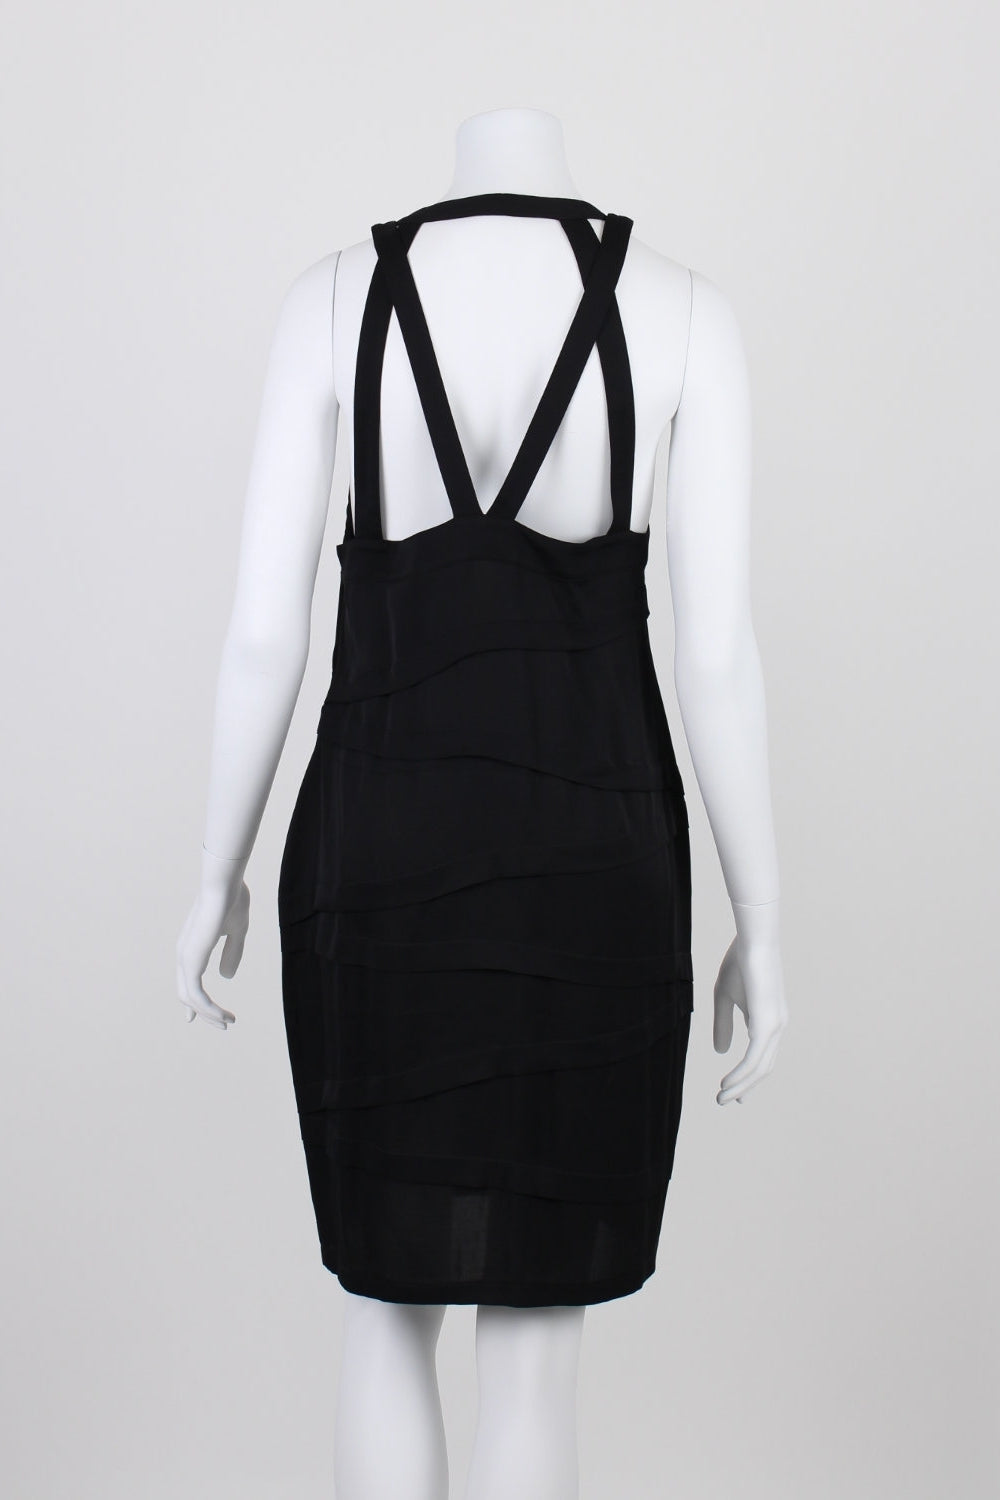 Ginger &amp; Smart Black Strappy Silk Dress 12